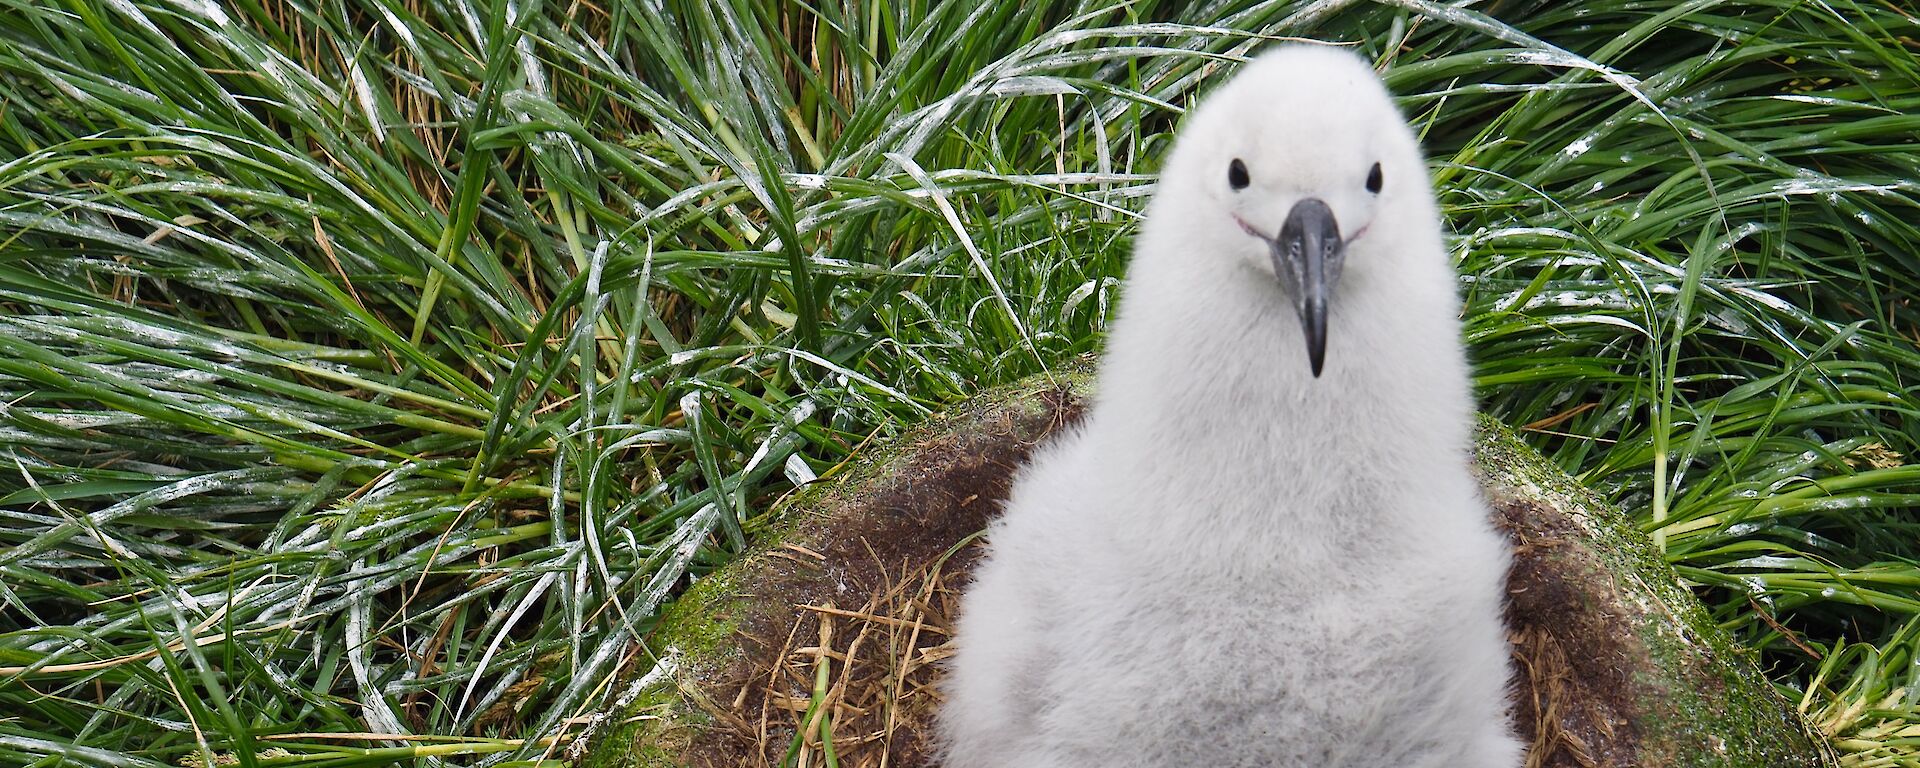 Black browed albatross chick